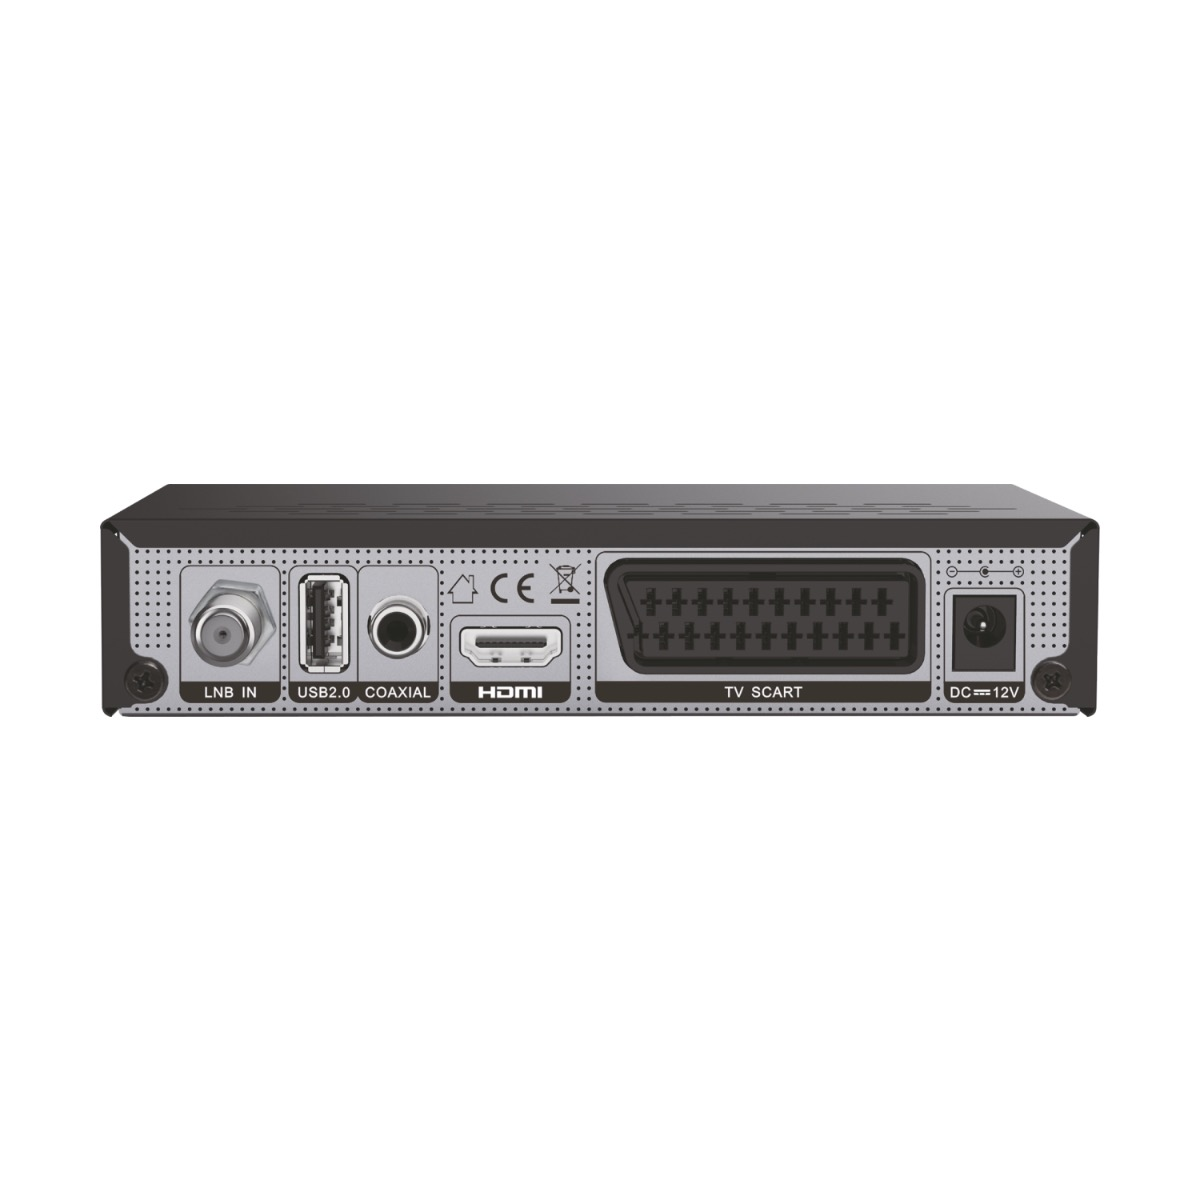 Receiver, DSR ANK PVR-Funktion, mit Satelliten (HDTV, PVR, Sat DVB-S, schwarz) DVB-C2, HD, (H.265), Digitaler DVB-S2, DVB-S2, 2100 1080p ANKARO HDMI Full DVB-T2 Receiver